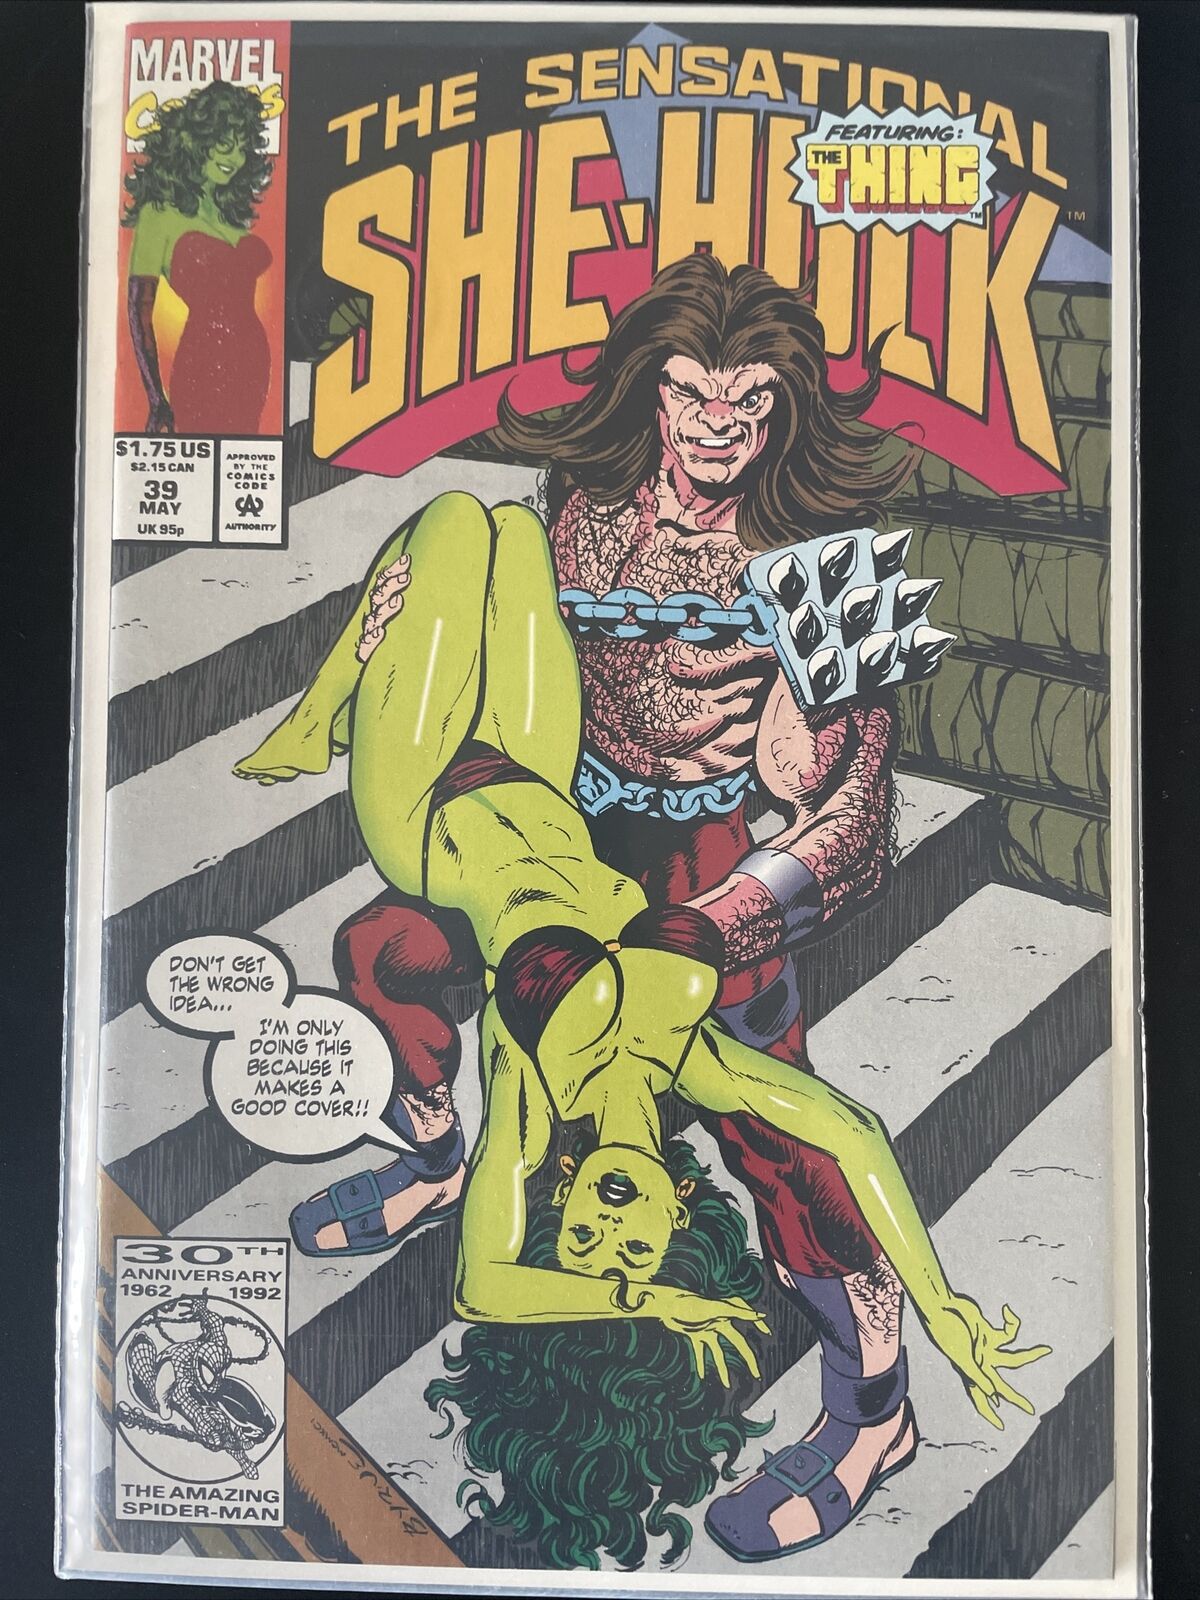 The Sensational She-Hulk #39 John Byrne (May 1992, Marvel Comics) Disney+